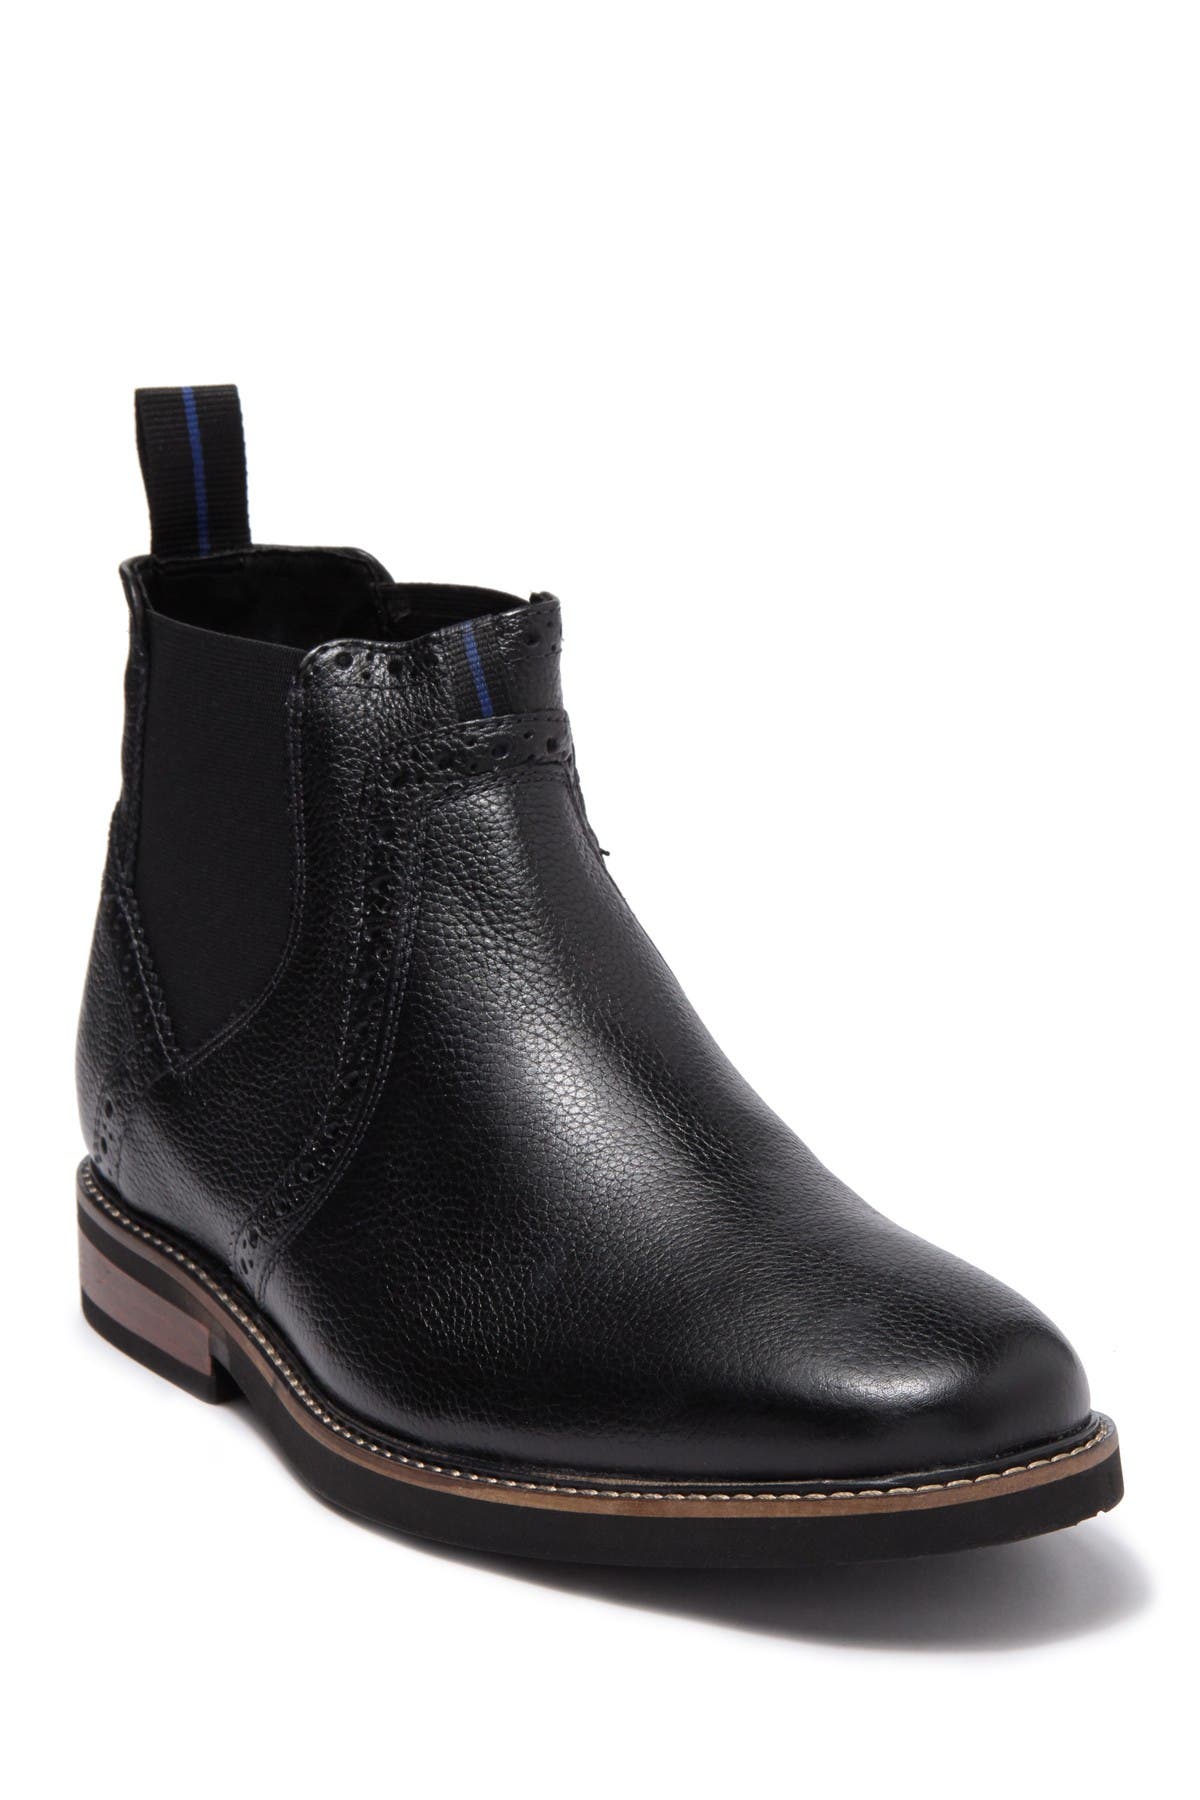 Otis Leather Plain Toe Chelsea Boot 